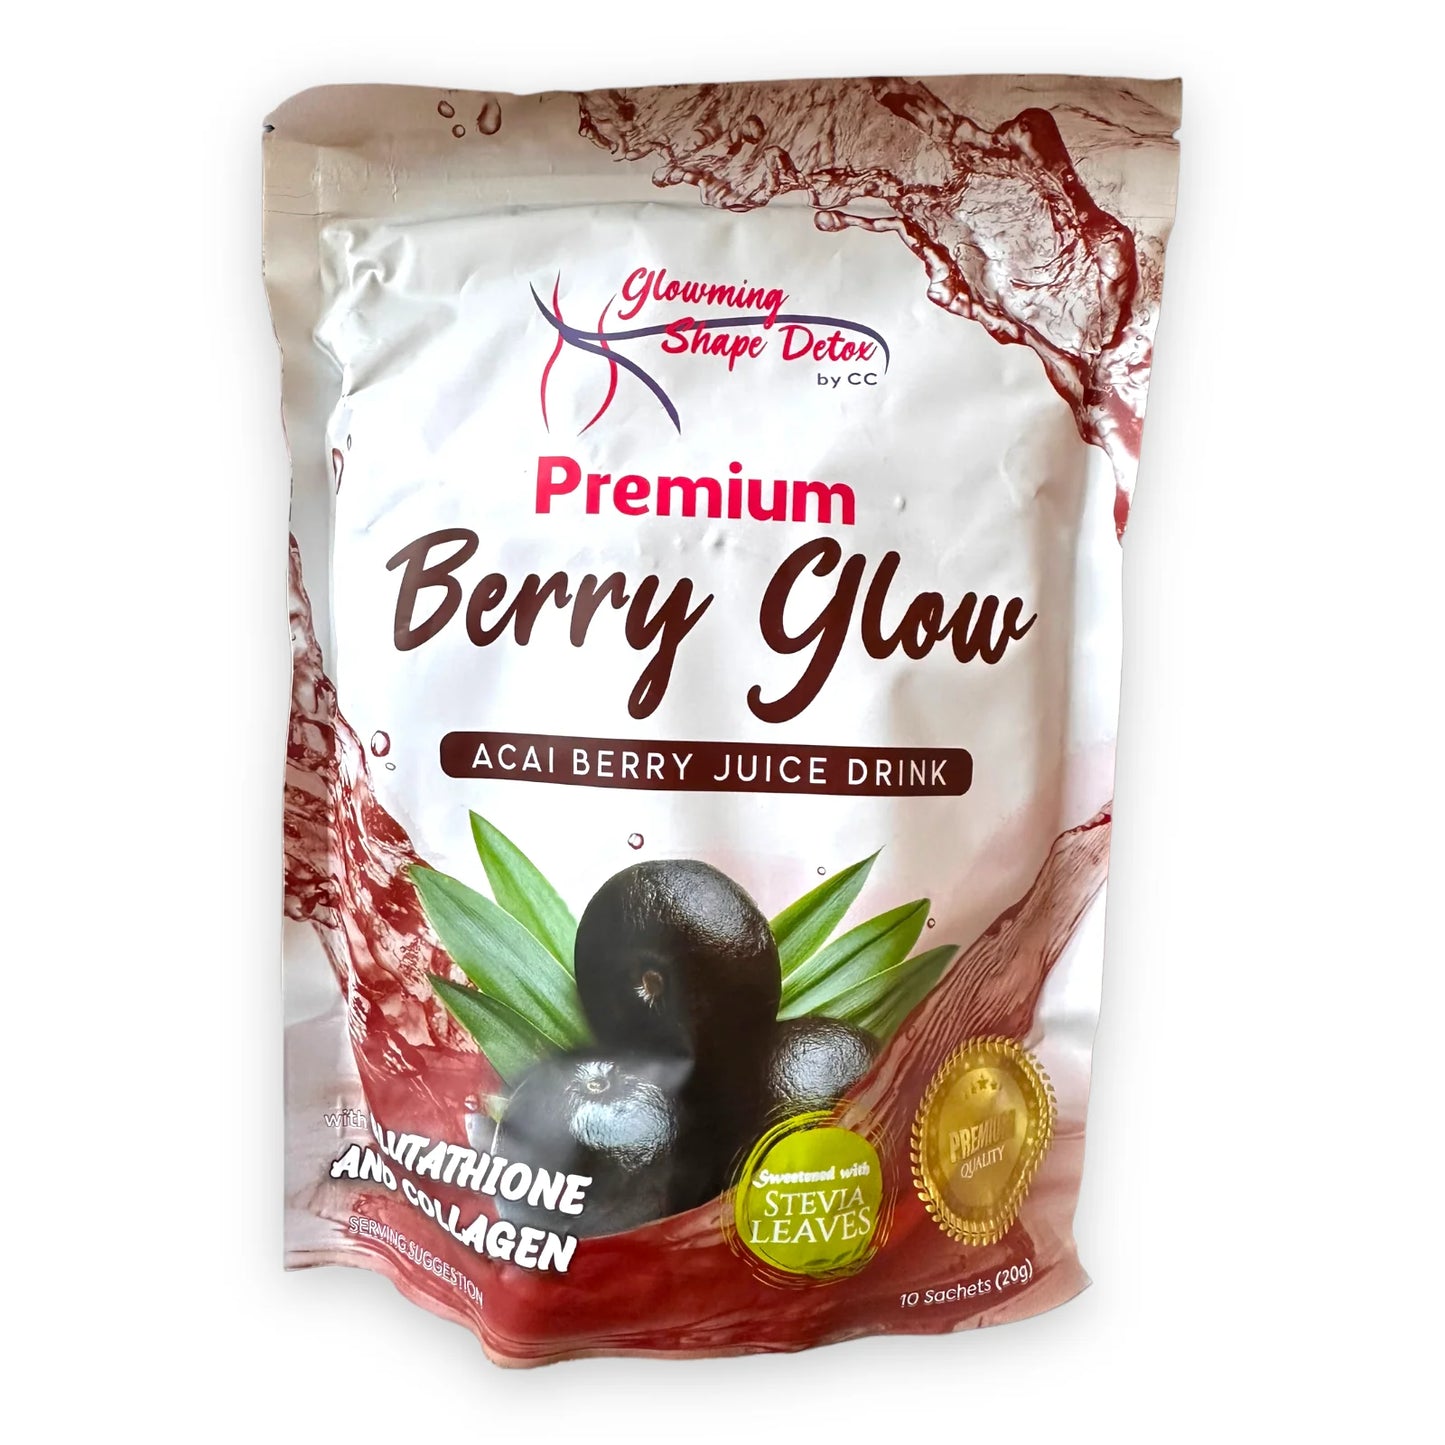 Glowming Shape Detox Premium Berry Glow